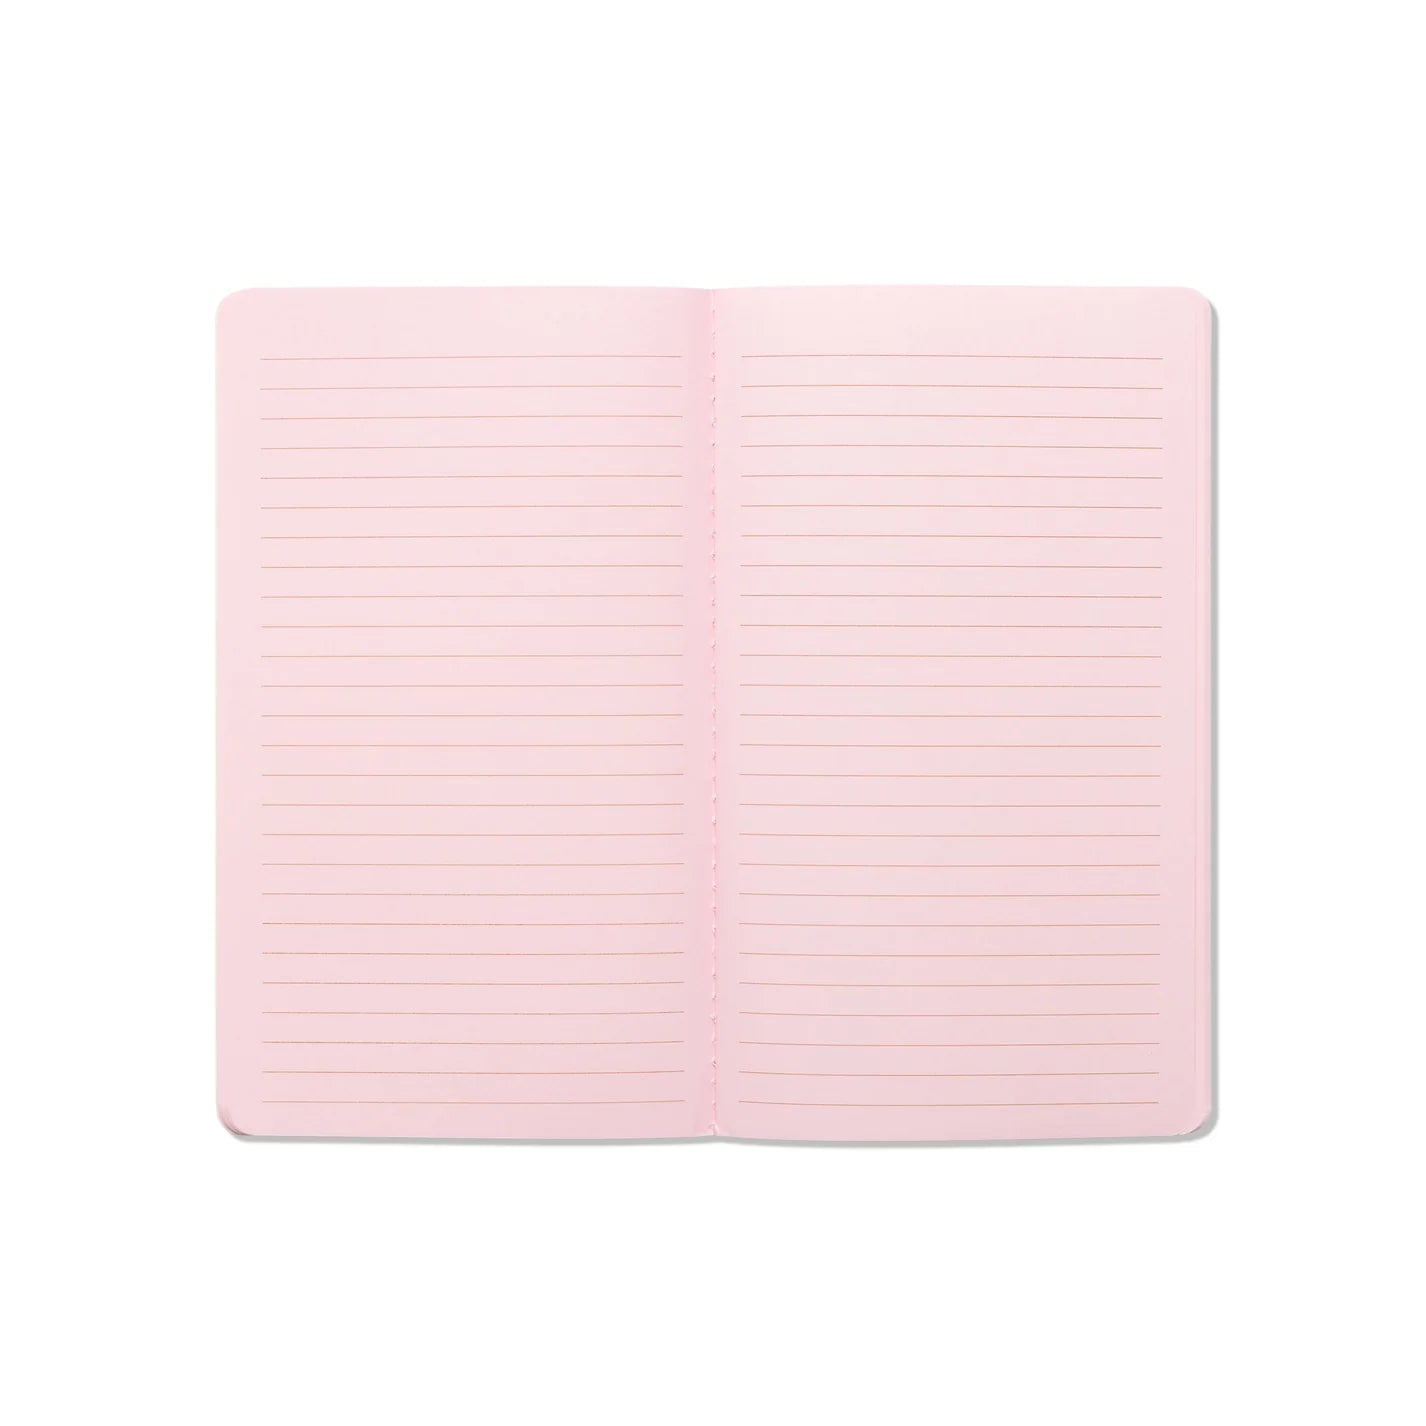 Notebook-Set of 3